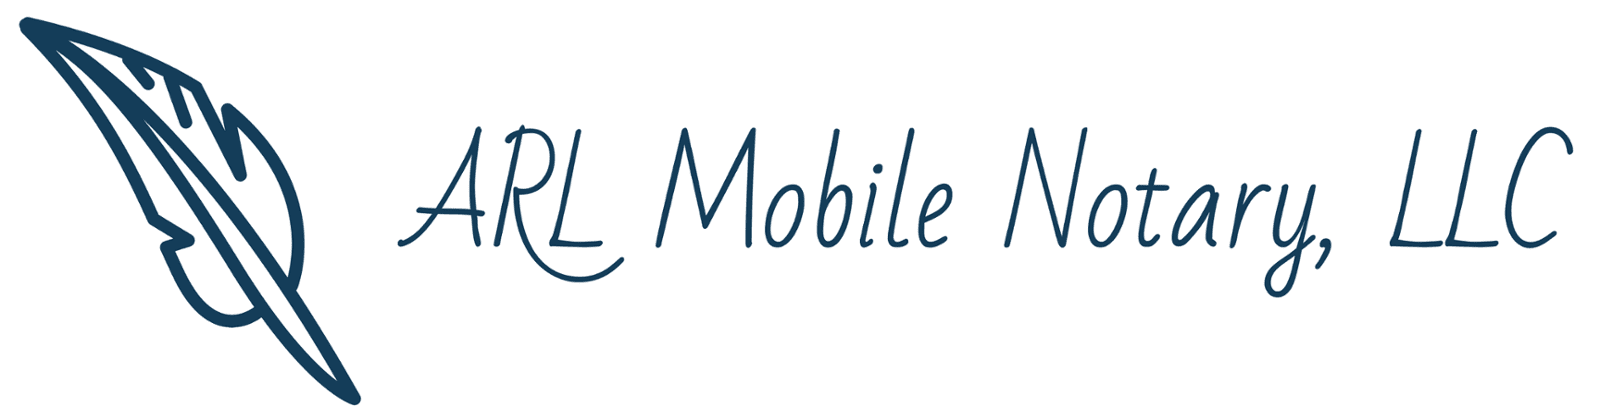 ARL Mobile Notary, LLC